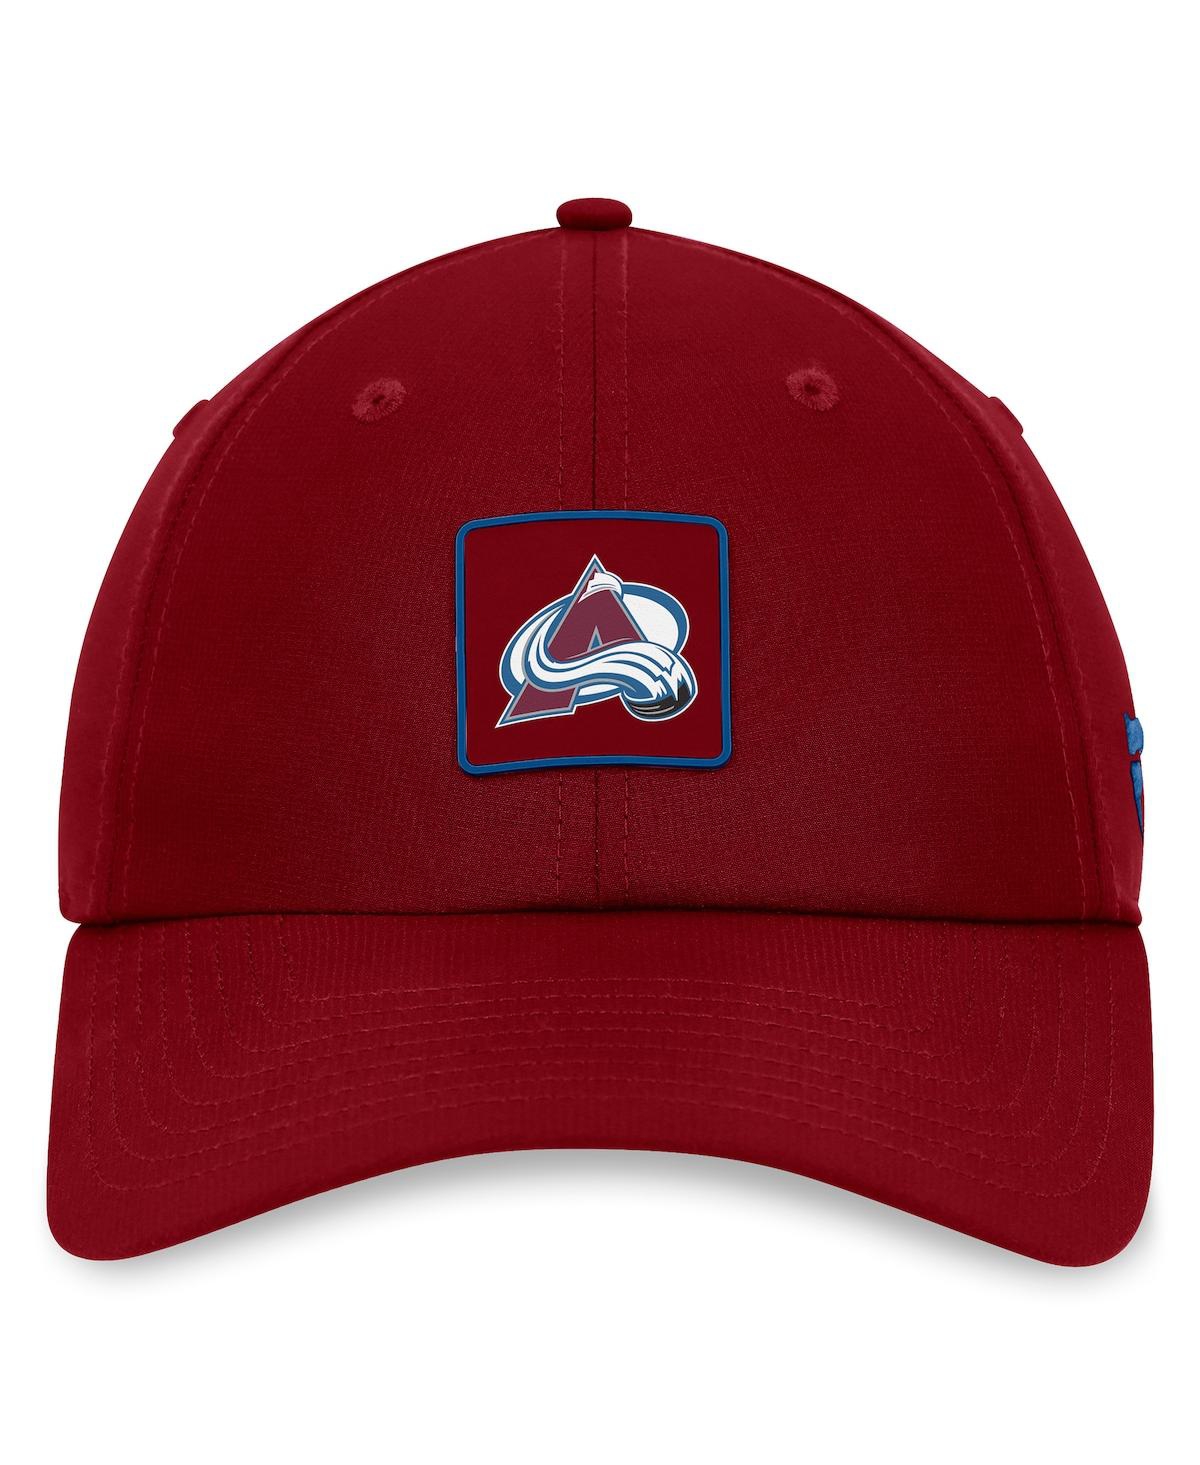 Shop Fanatics Men's  Burgundy Colorado Avalanche Authentic Pro Rink Adjustable Hat